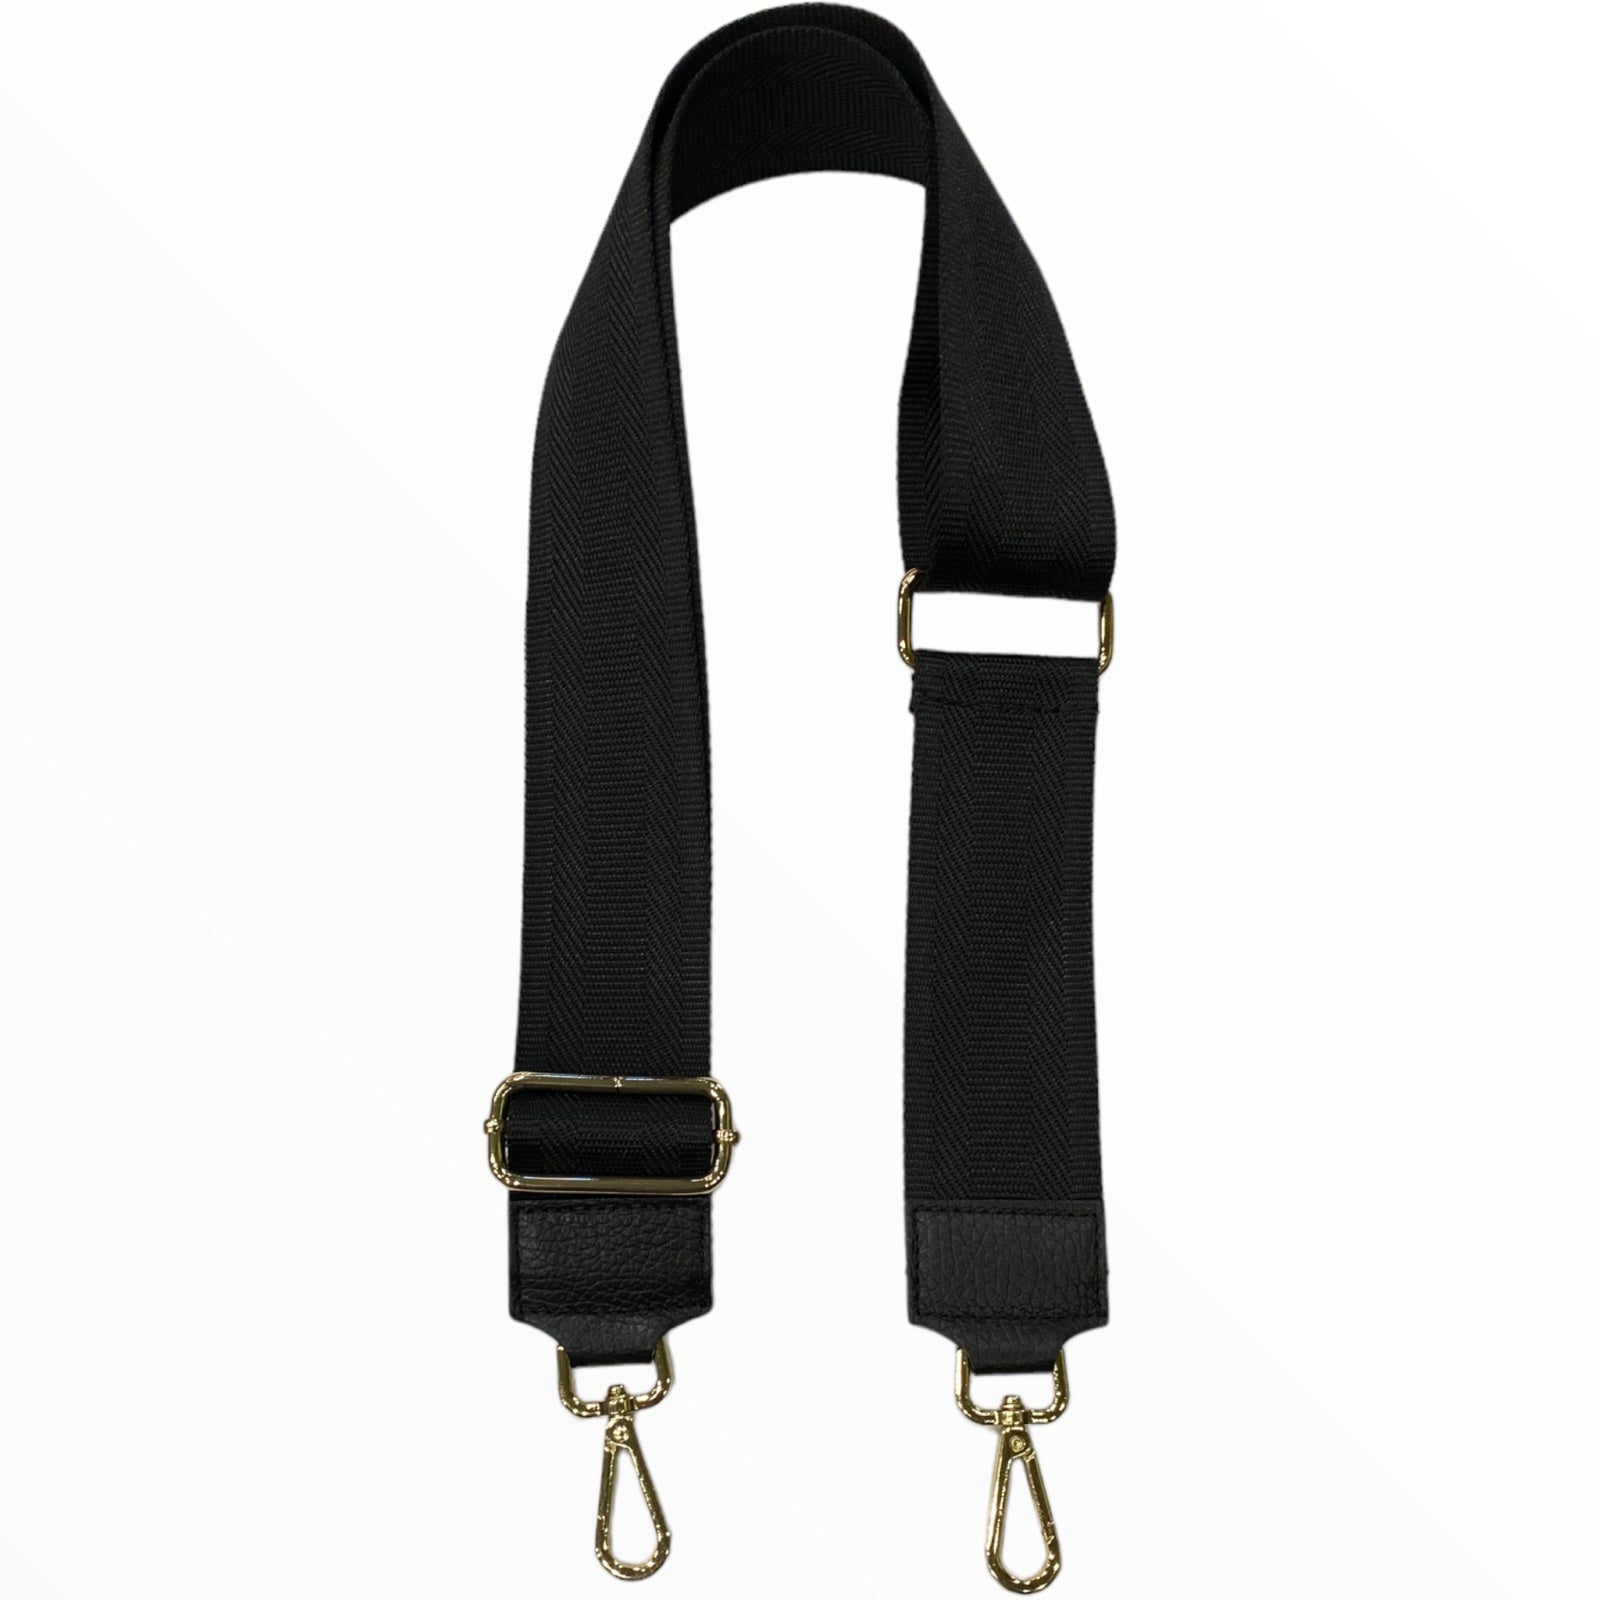 Black minimal adjustable strap with gold metals